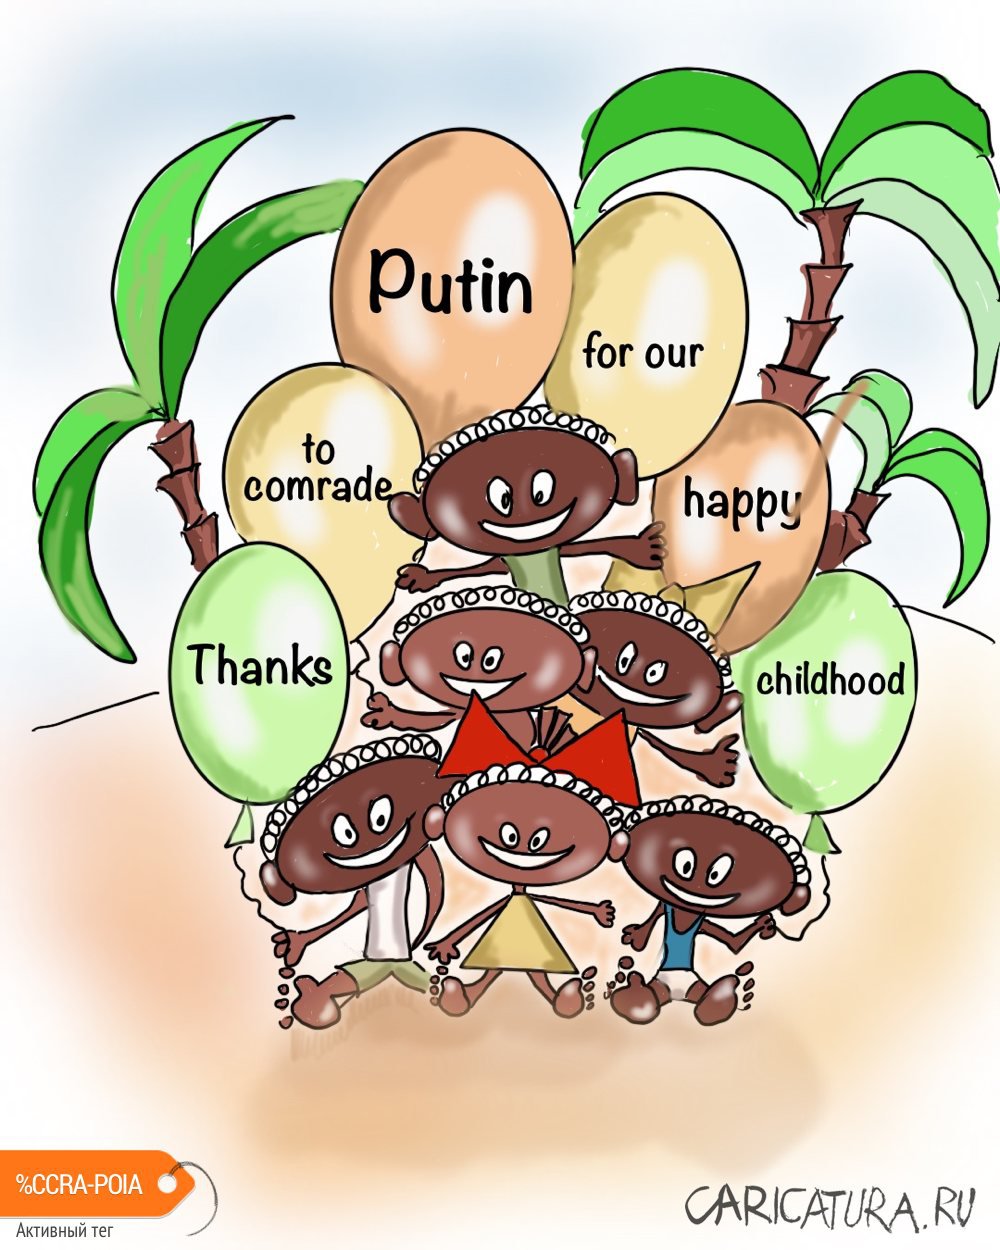 Карикатура "Спасибо за счастливое детство", Алексей Корякин